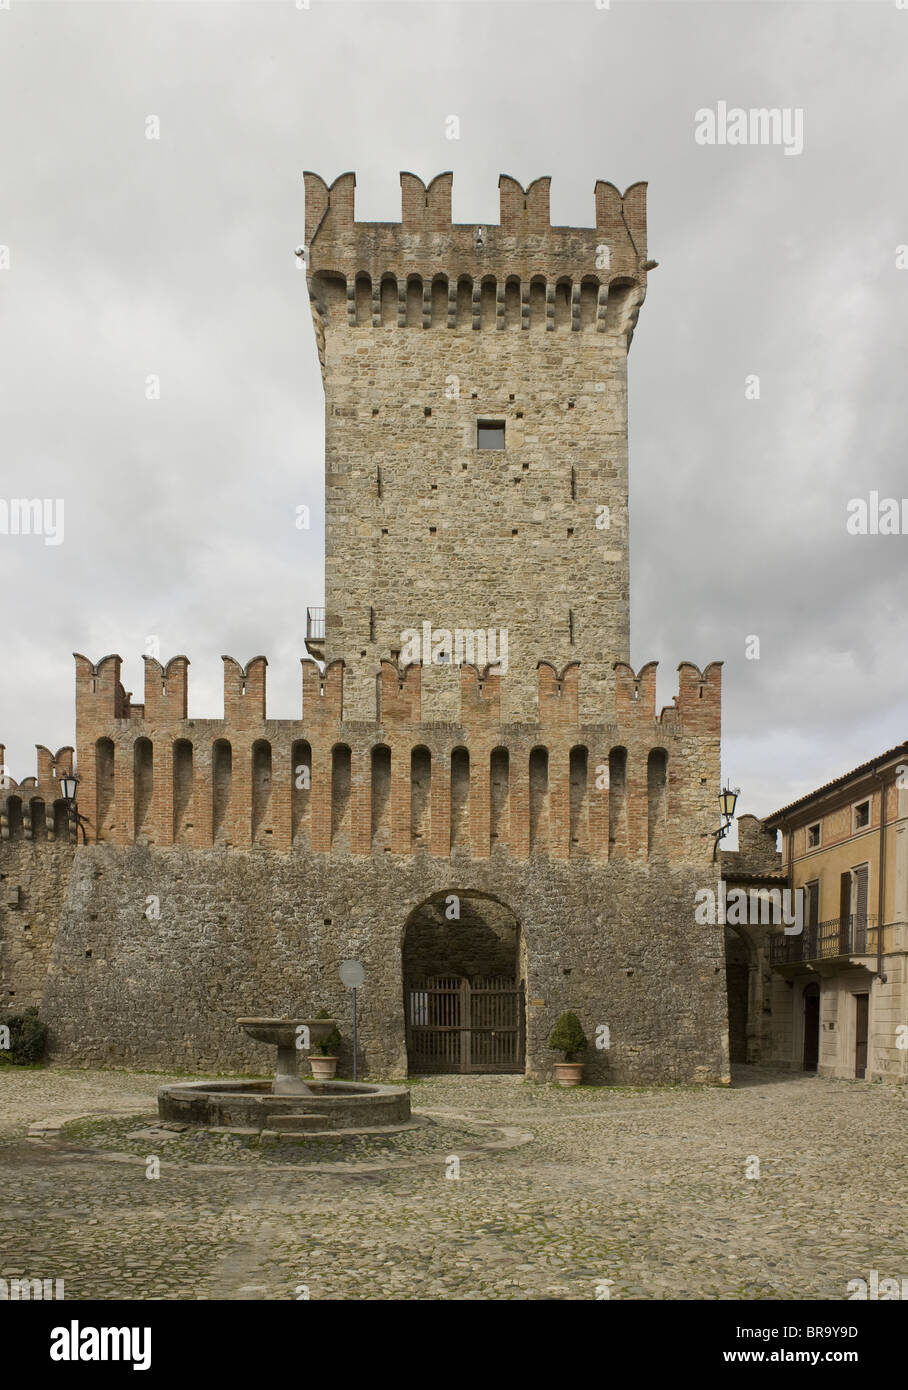 Vigoleno, near Parma, Italy. Castle with tower built late 14th century Stock Photo